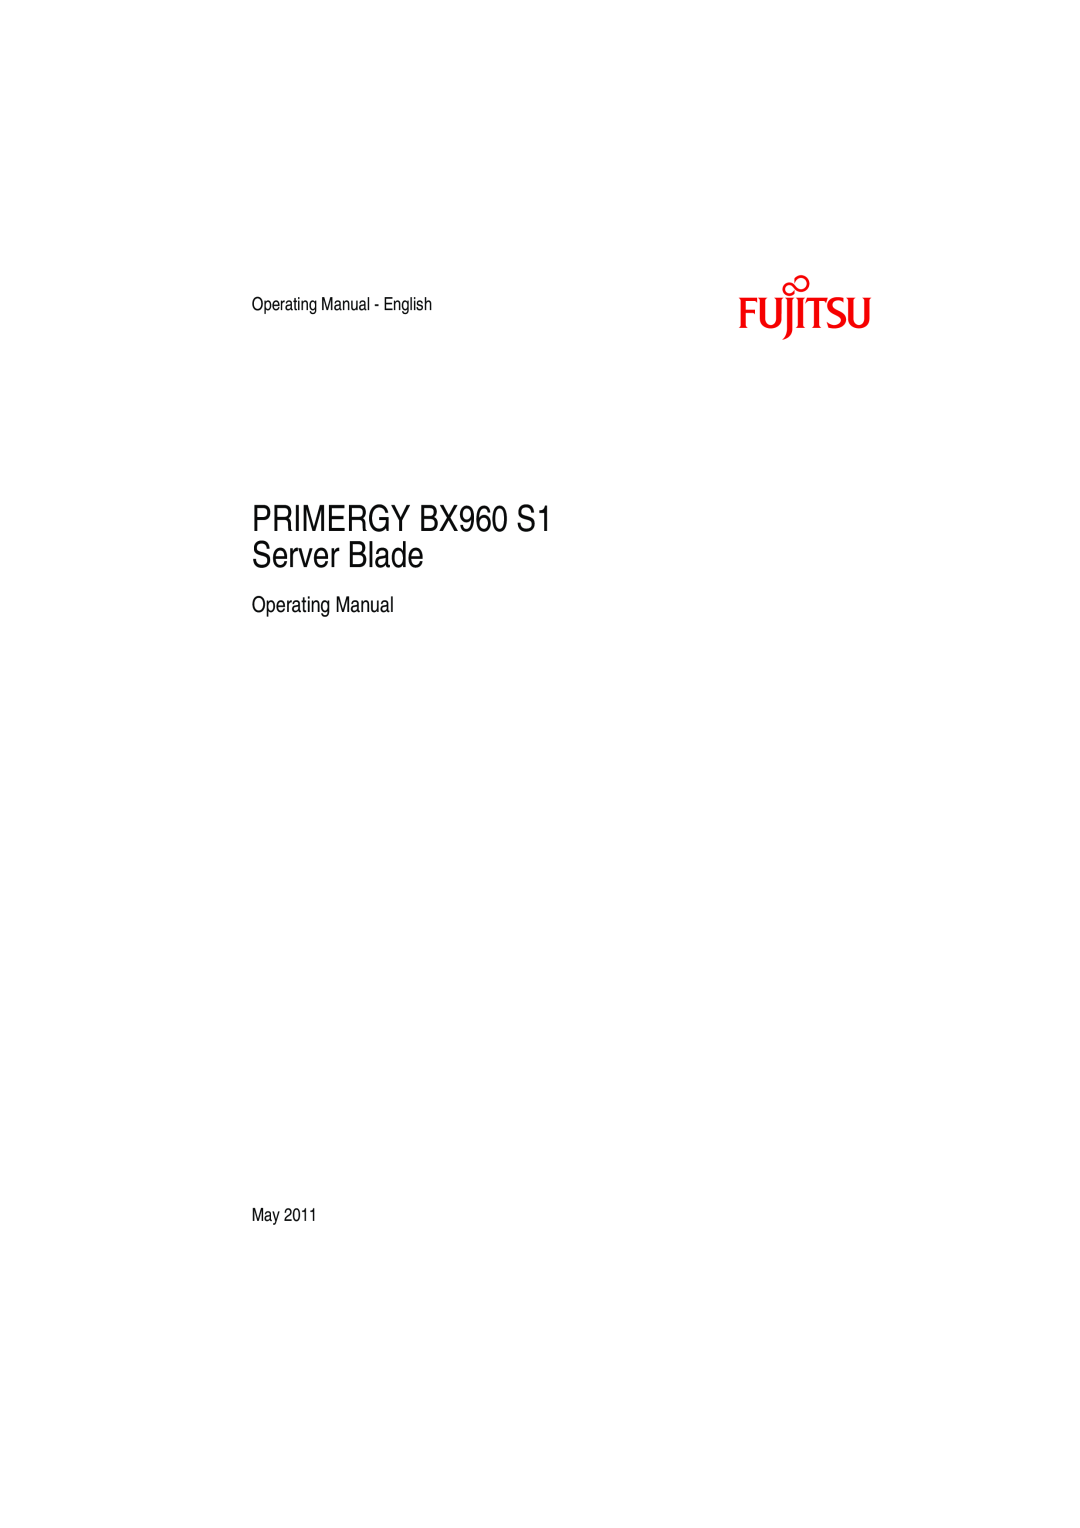 Fujitsu manual PRIMERGY BX960 S1 Server Blade, Operating Manual 